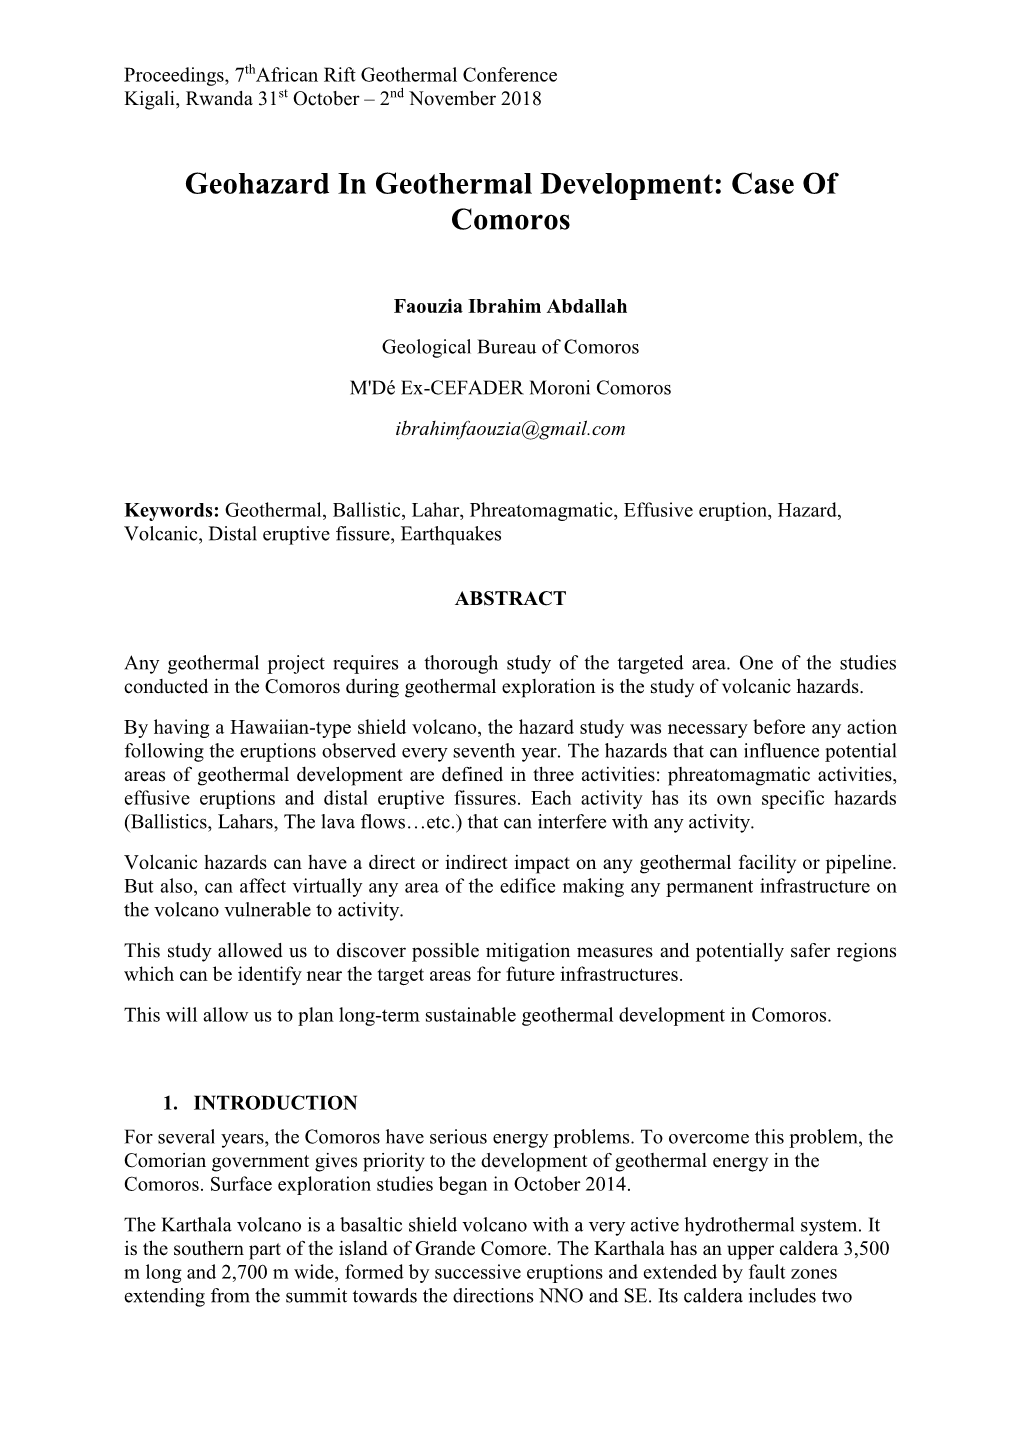 Geohazard in Geothermal Development: Case of Comoros